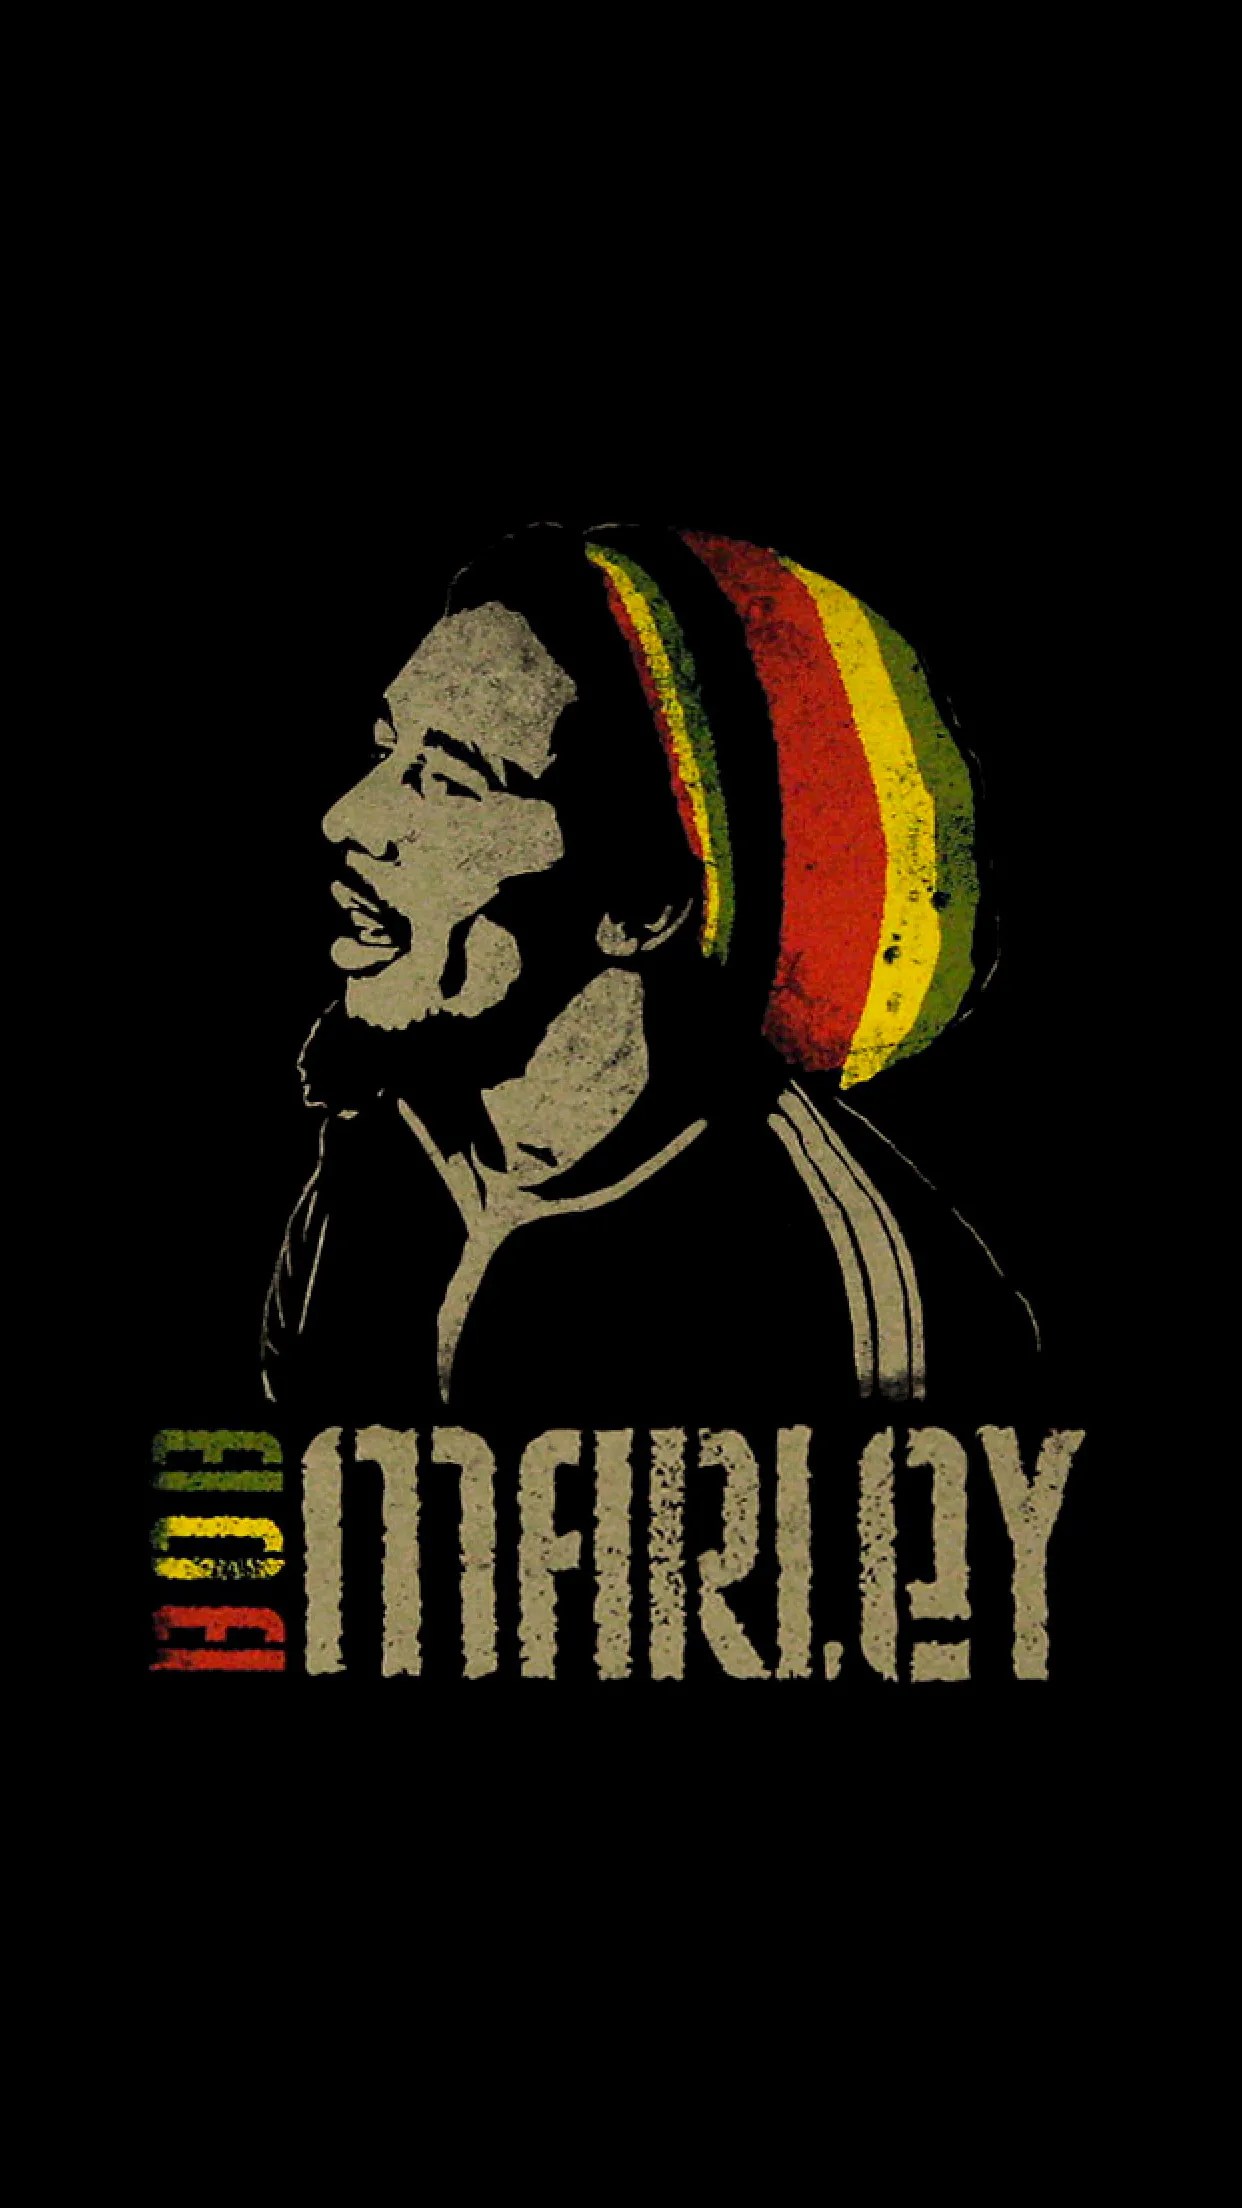 Bob Marley Wallpaper for iPhone Pro Max, X, 6